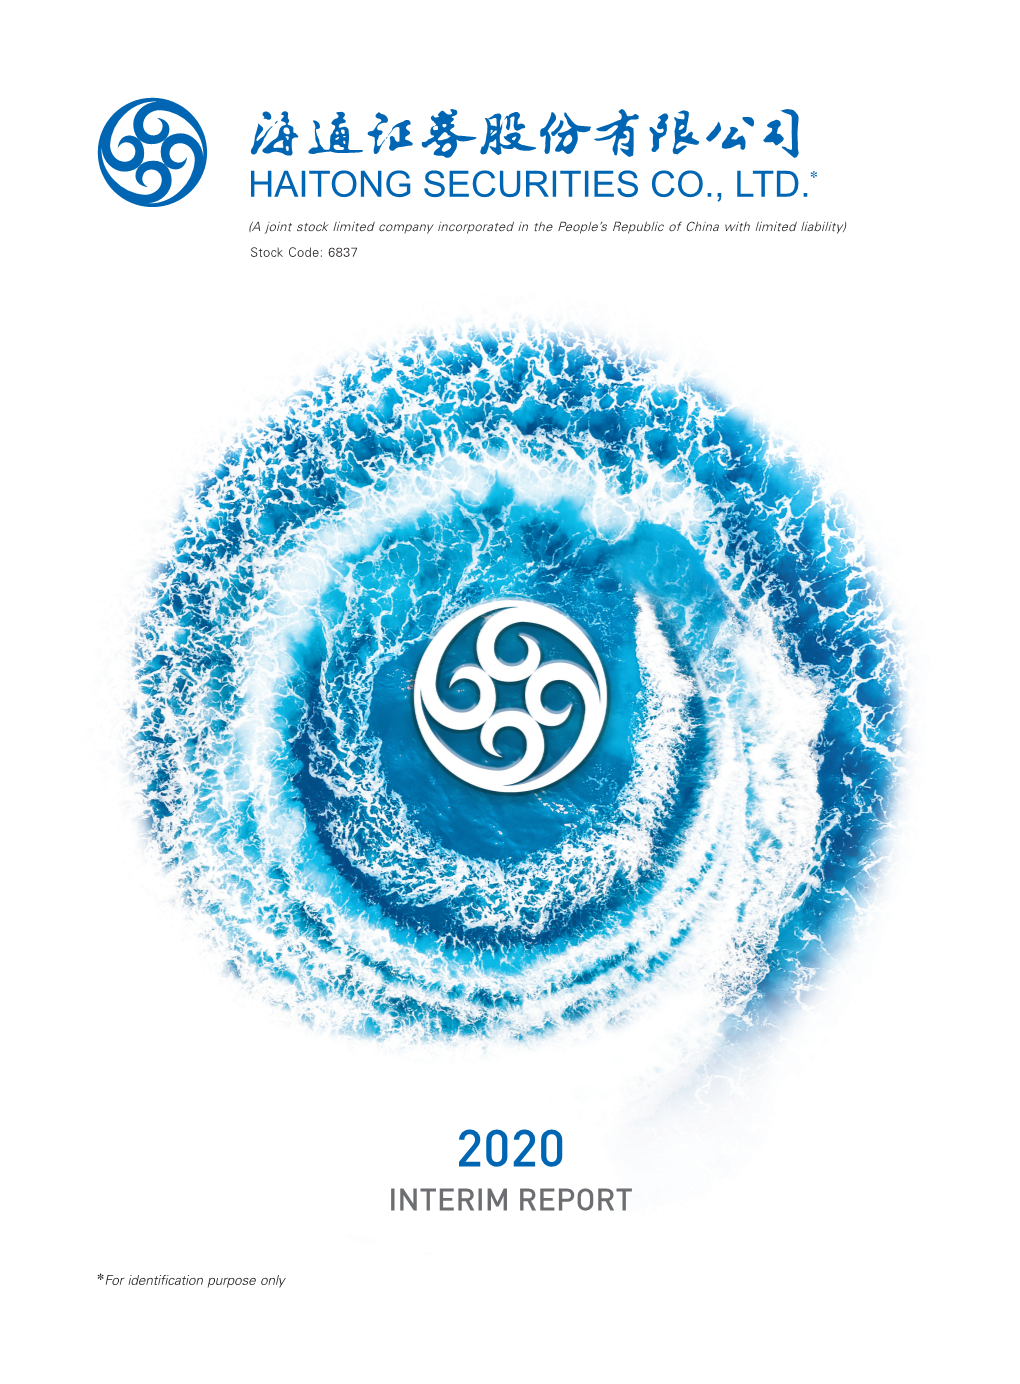 HAITONG SECURITIES CO., LTD. Interim Report 2020 (H Share)